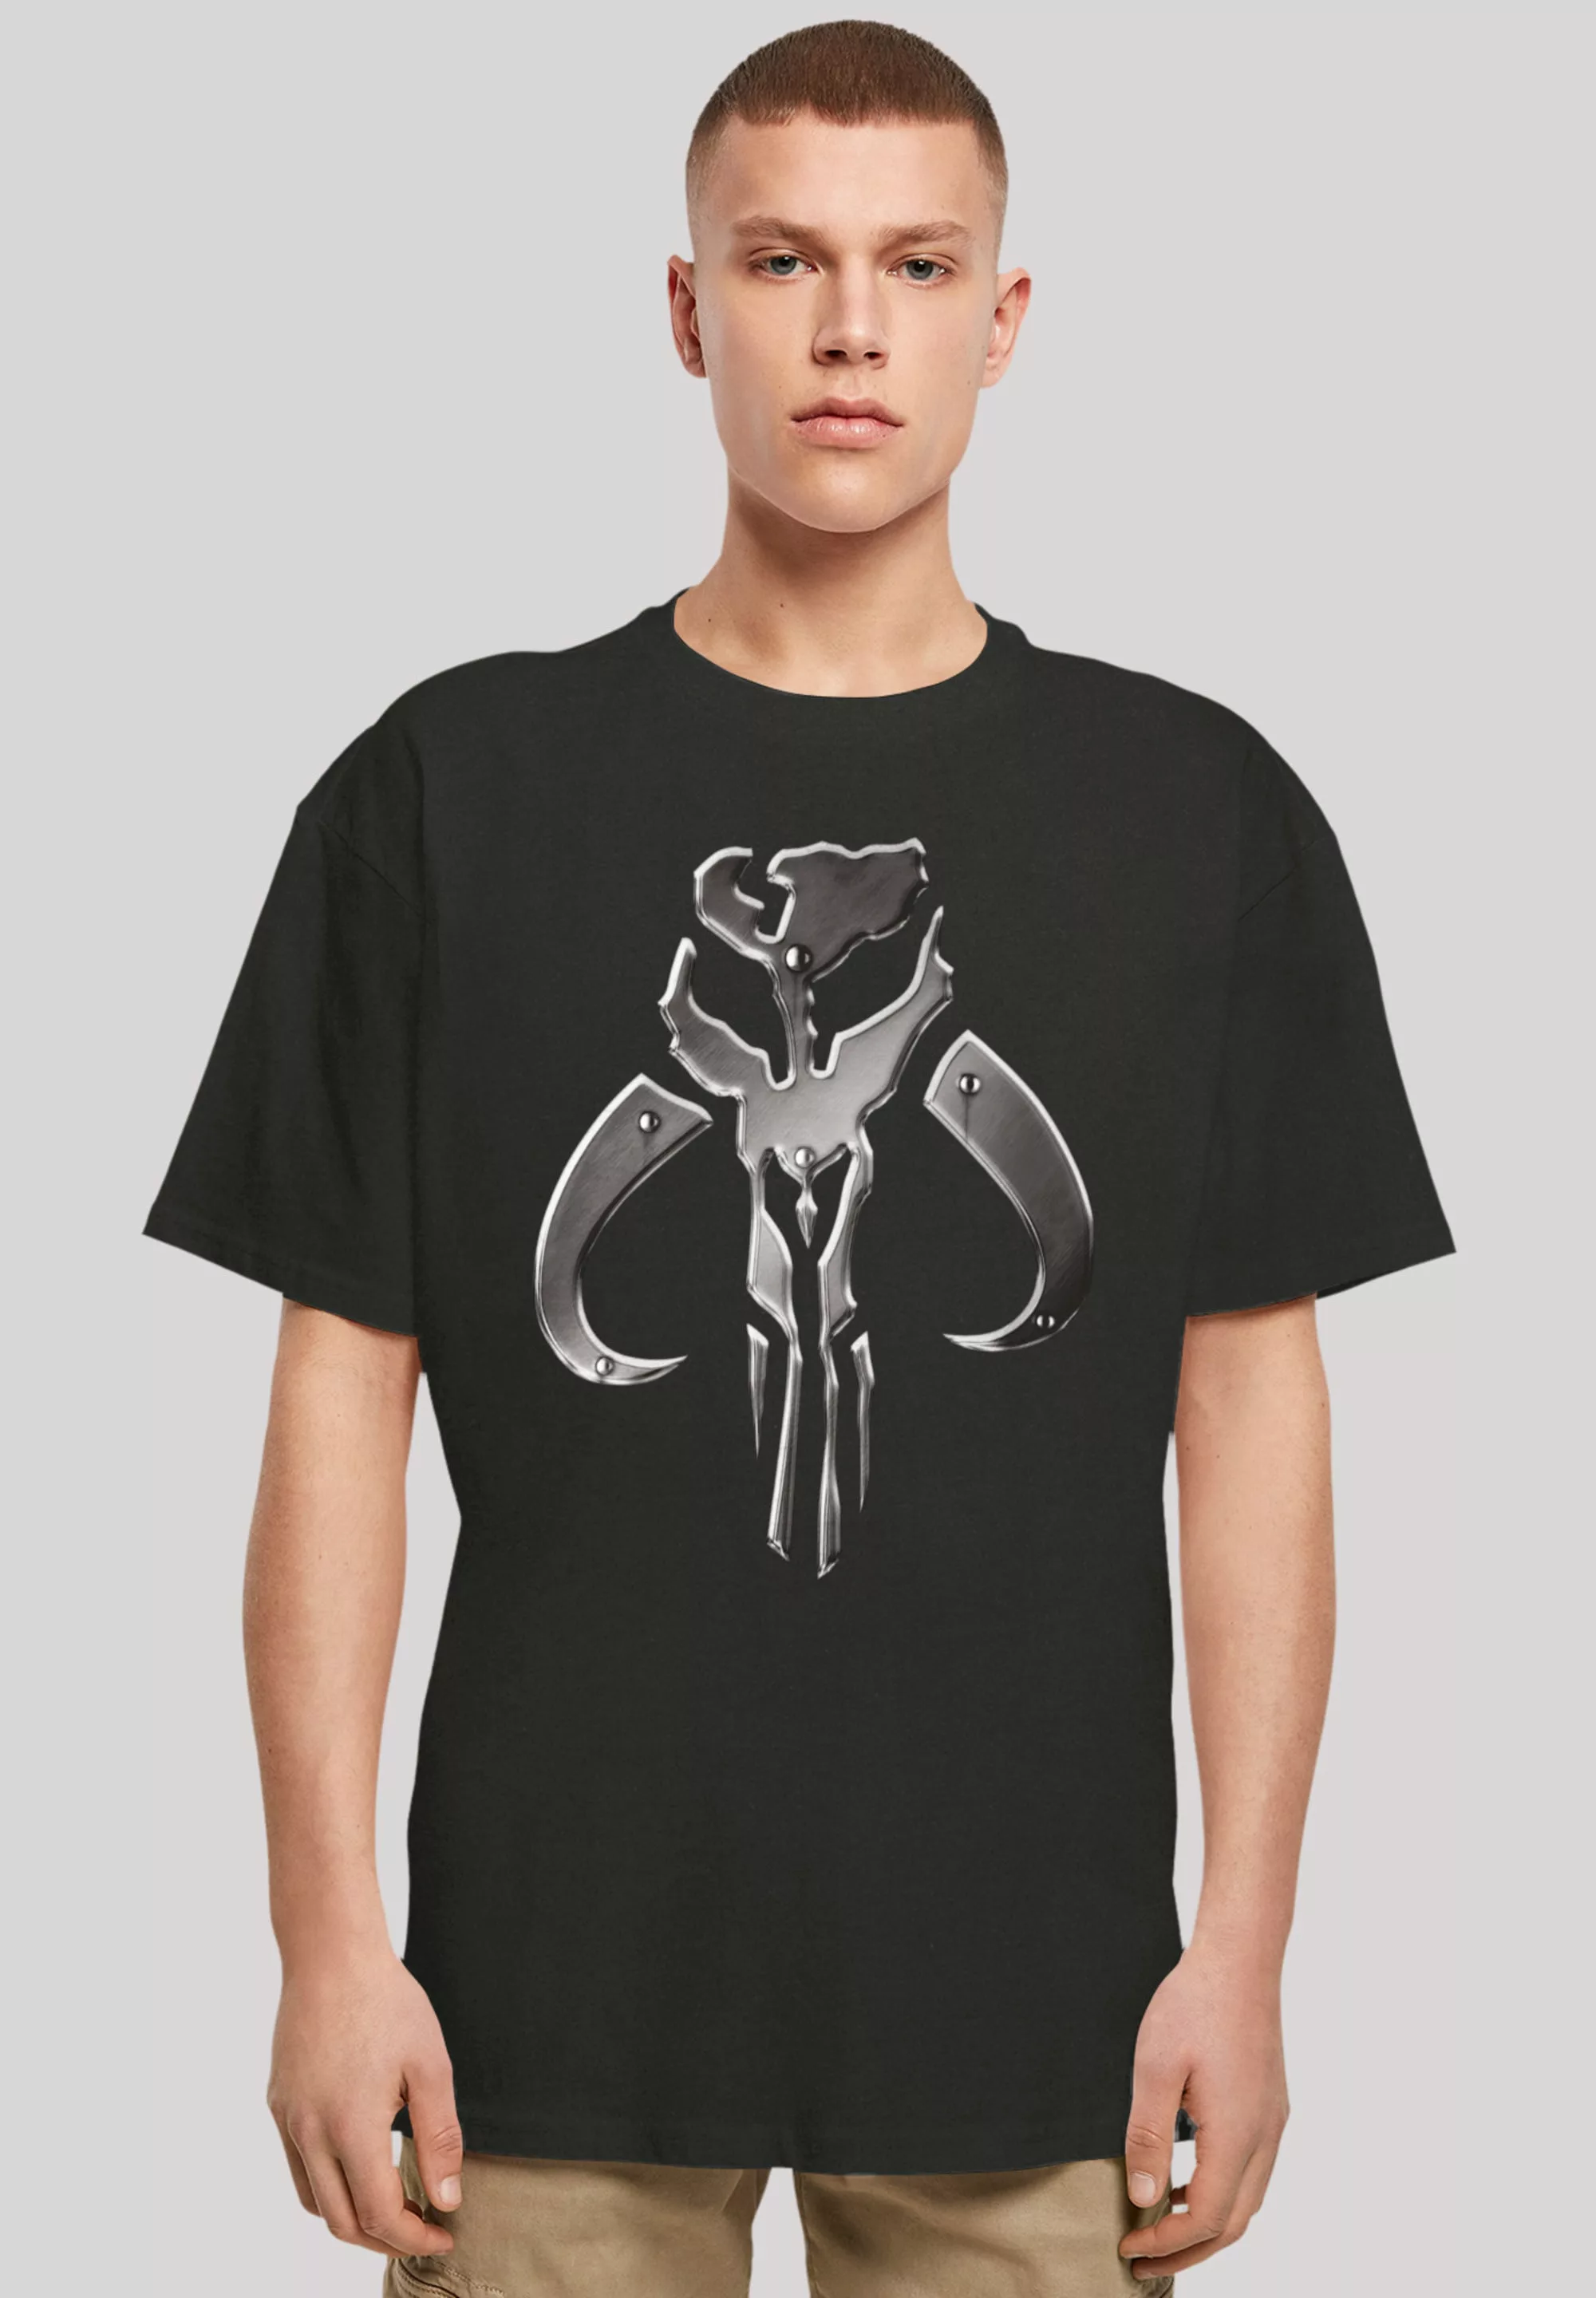 F4NT4STIC T-Shirt "Star Wars The Mandalorian Boba Fett", Premium Qualität günstig online kaufen